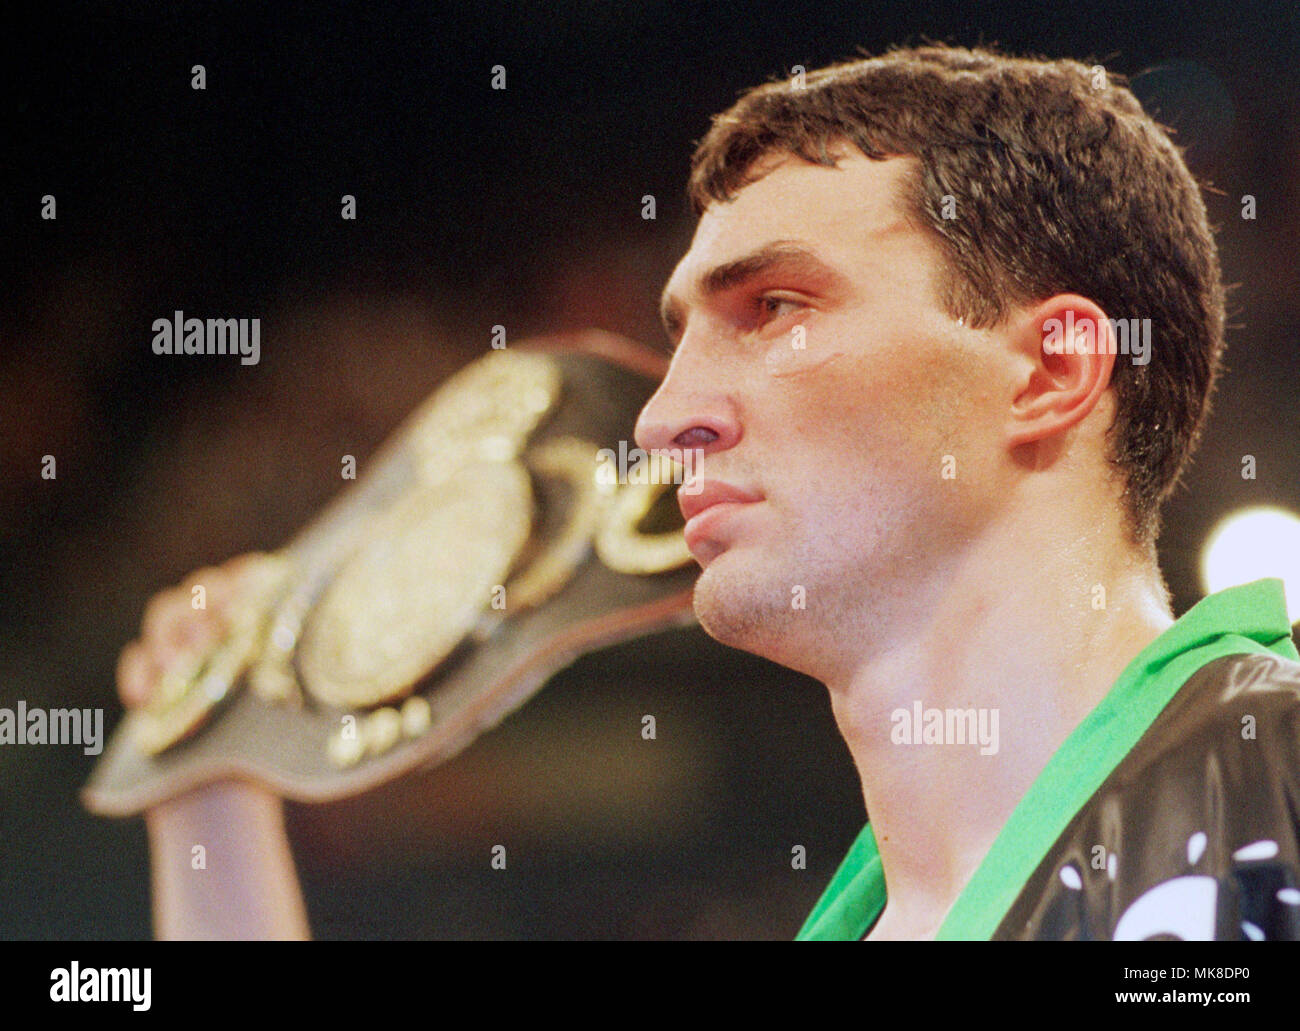 Boxing: Kšln Arena Cologne Germany 25.9.1999, EBU European Championship fight Axel Schulz (GER) vs Wladimir Klitschko (UKR) ---Wladimir Klitschko with belt Stock Photo